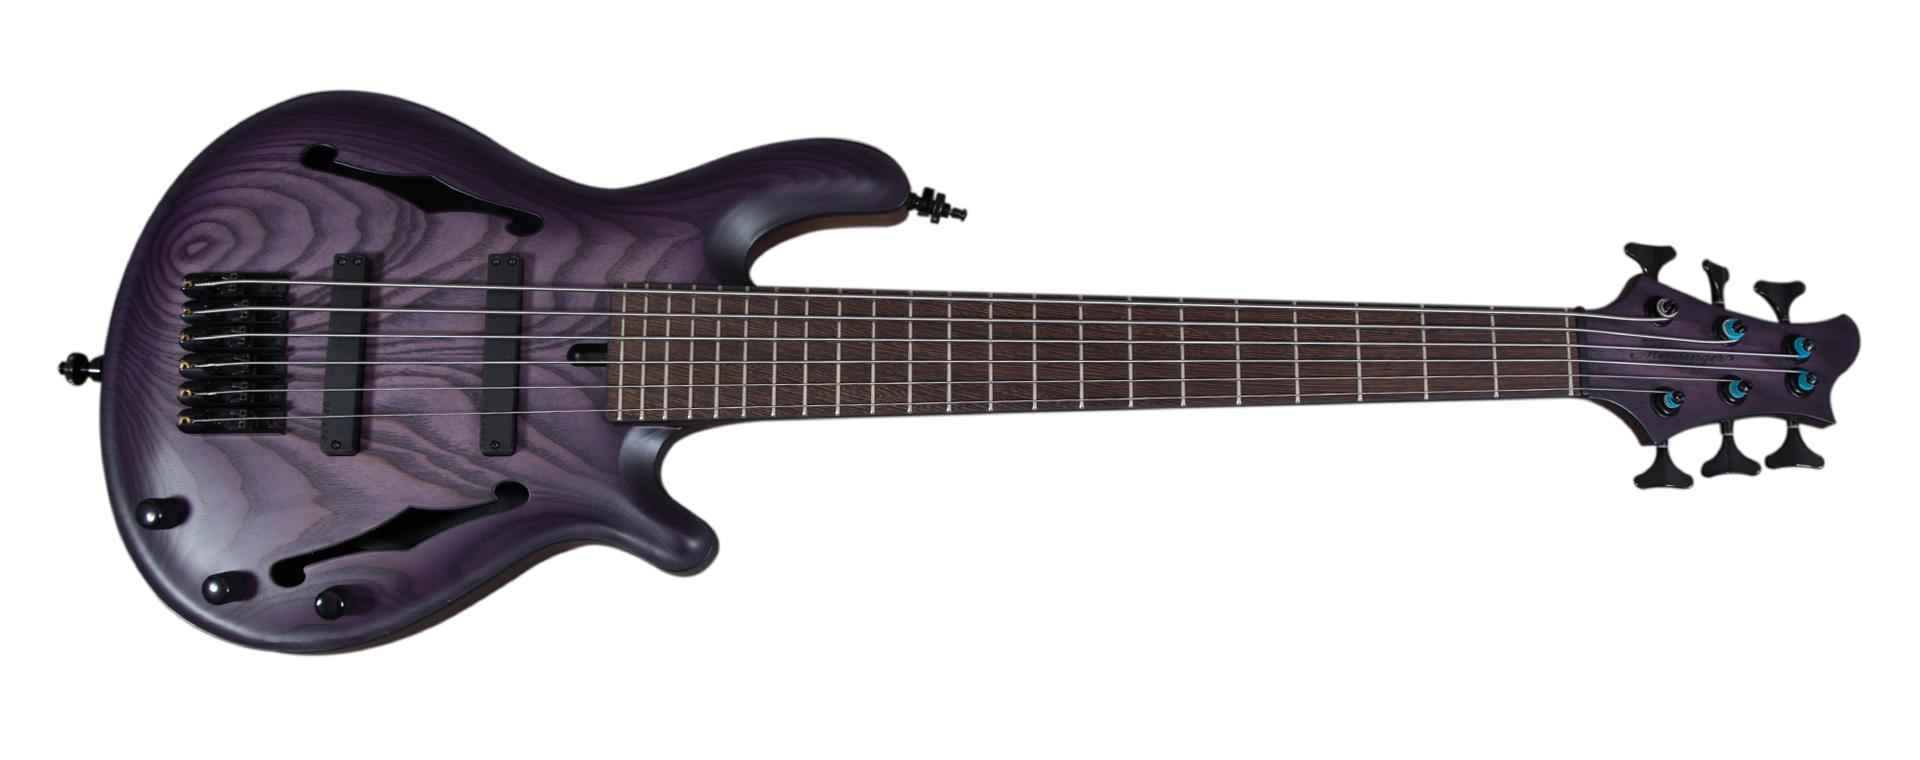 Joker B 6p 2 tone purple